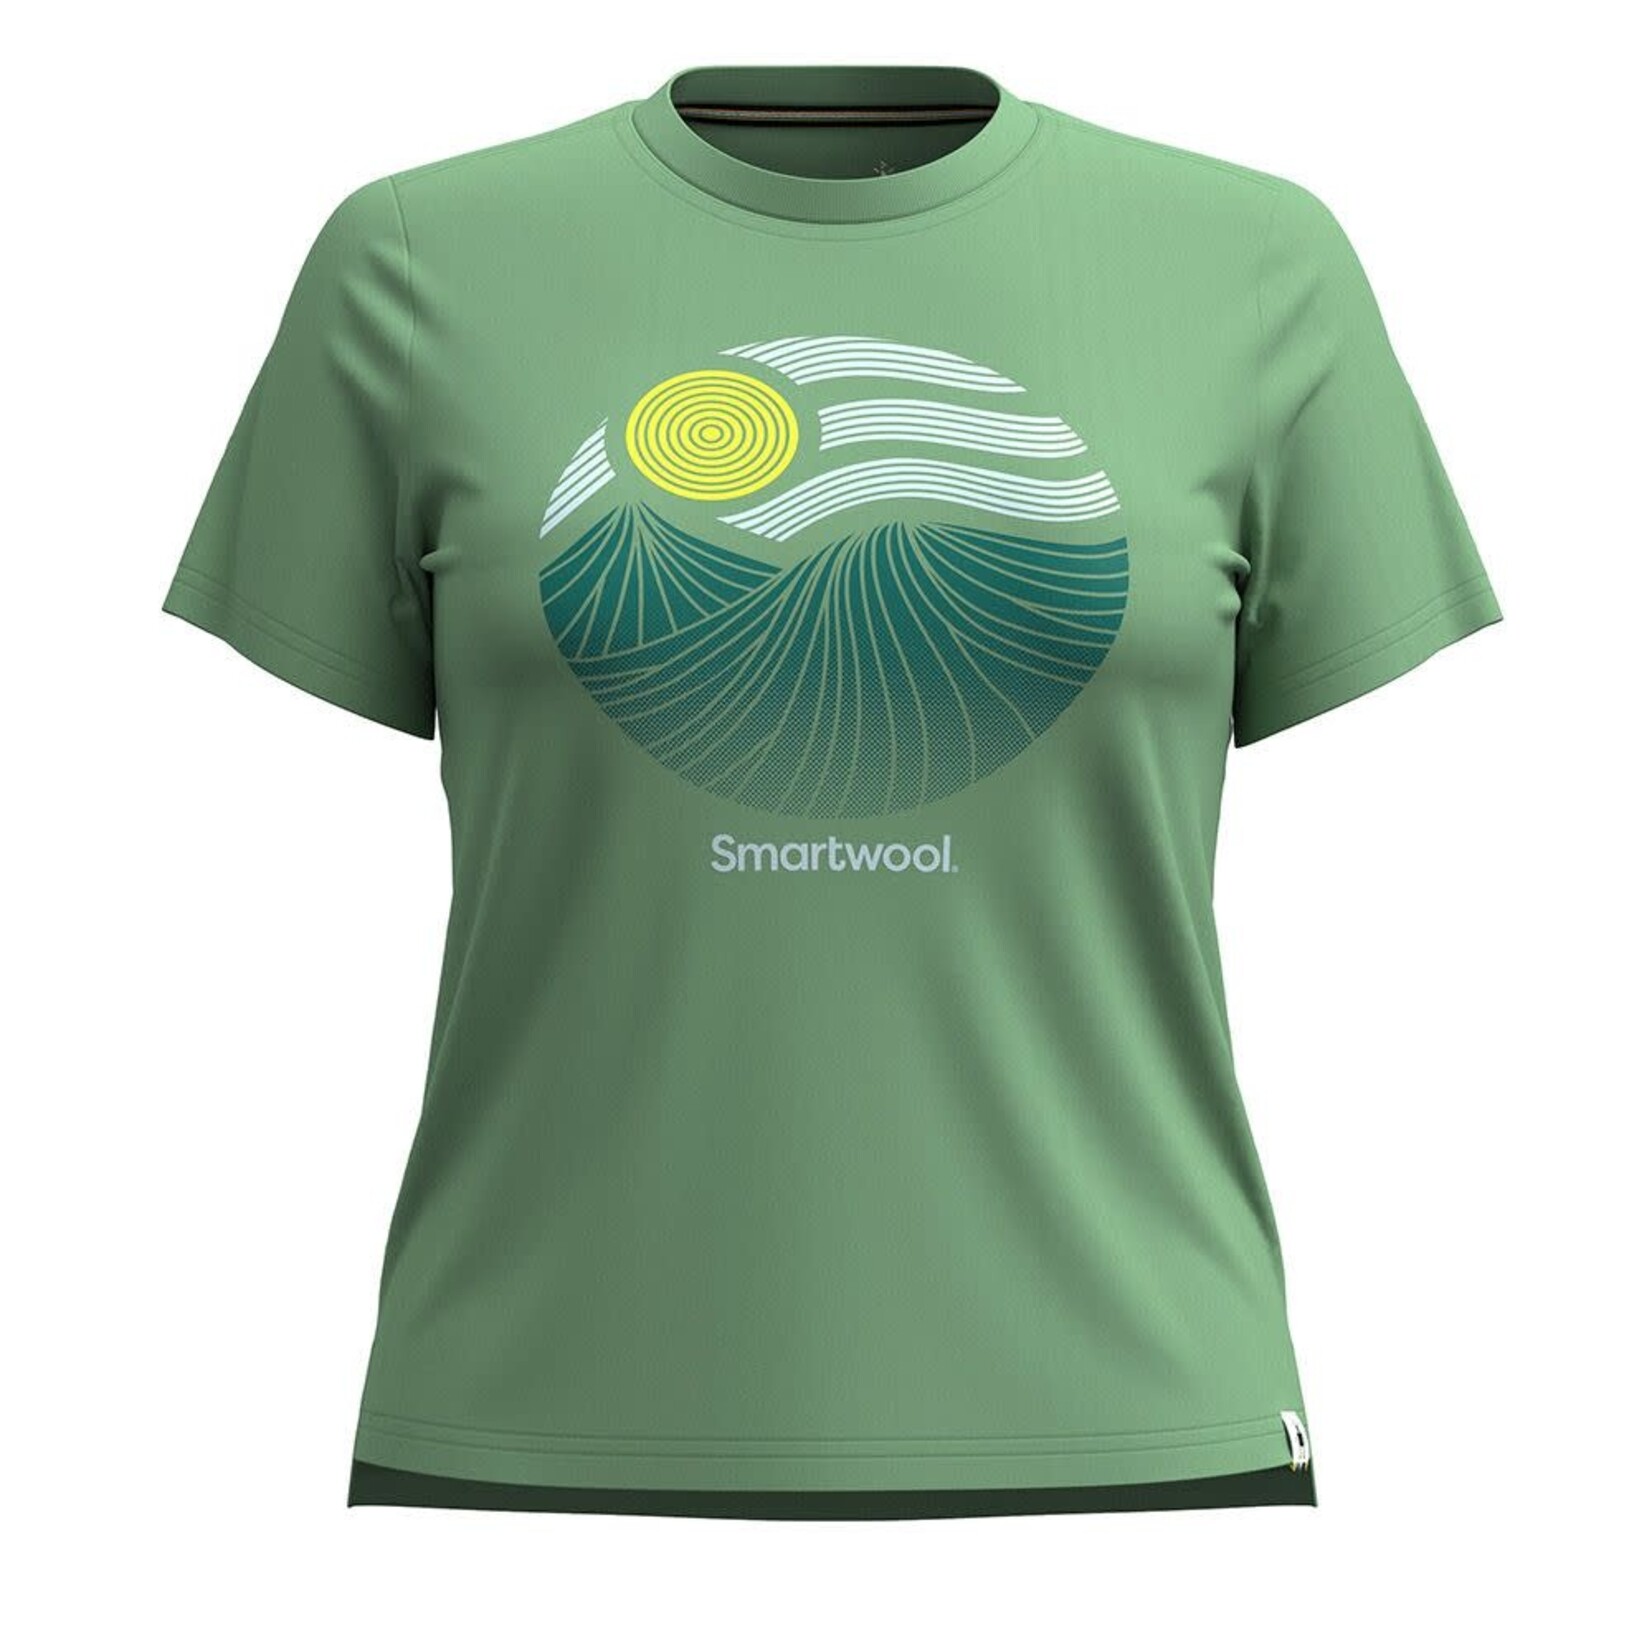 Smartwool Horizon View Graphic Short Sleeve Tee (T-shirt à imprimé Horizon View femme)